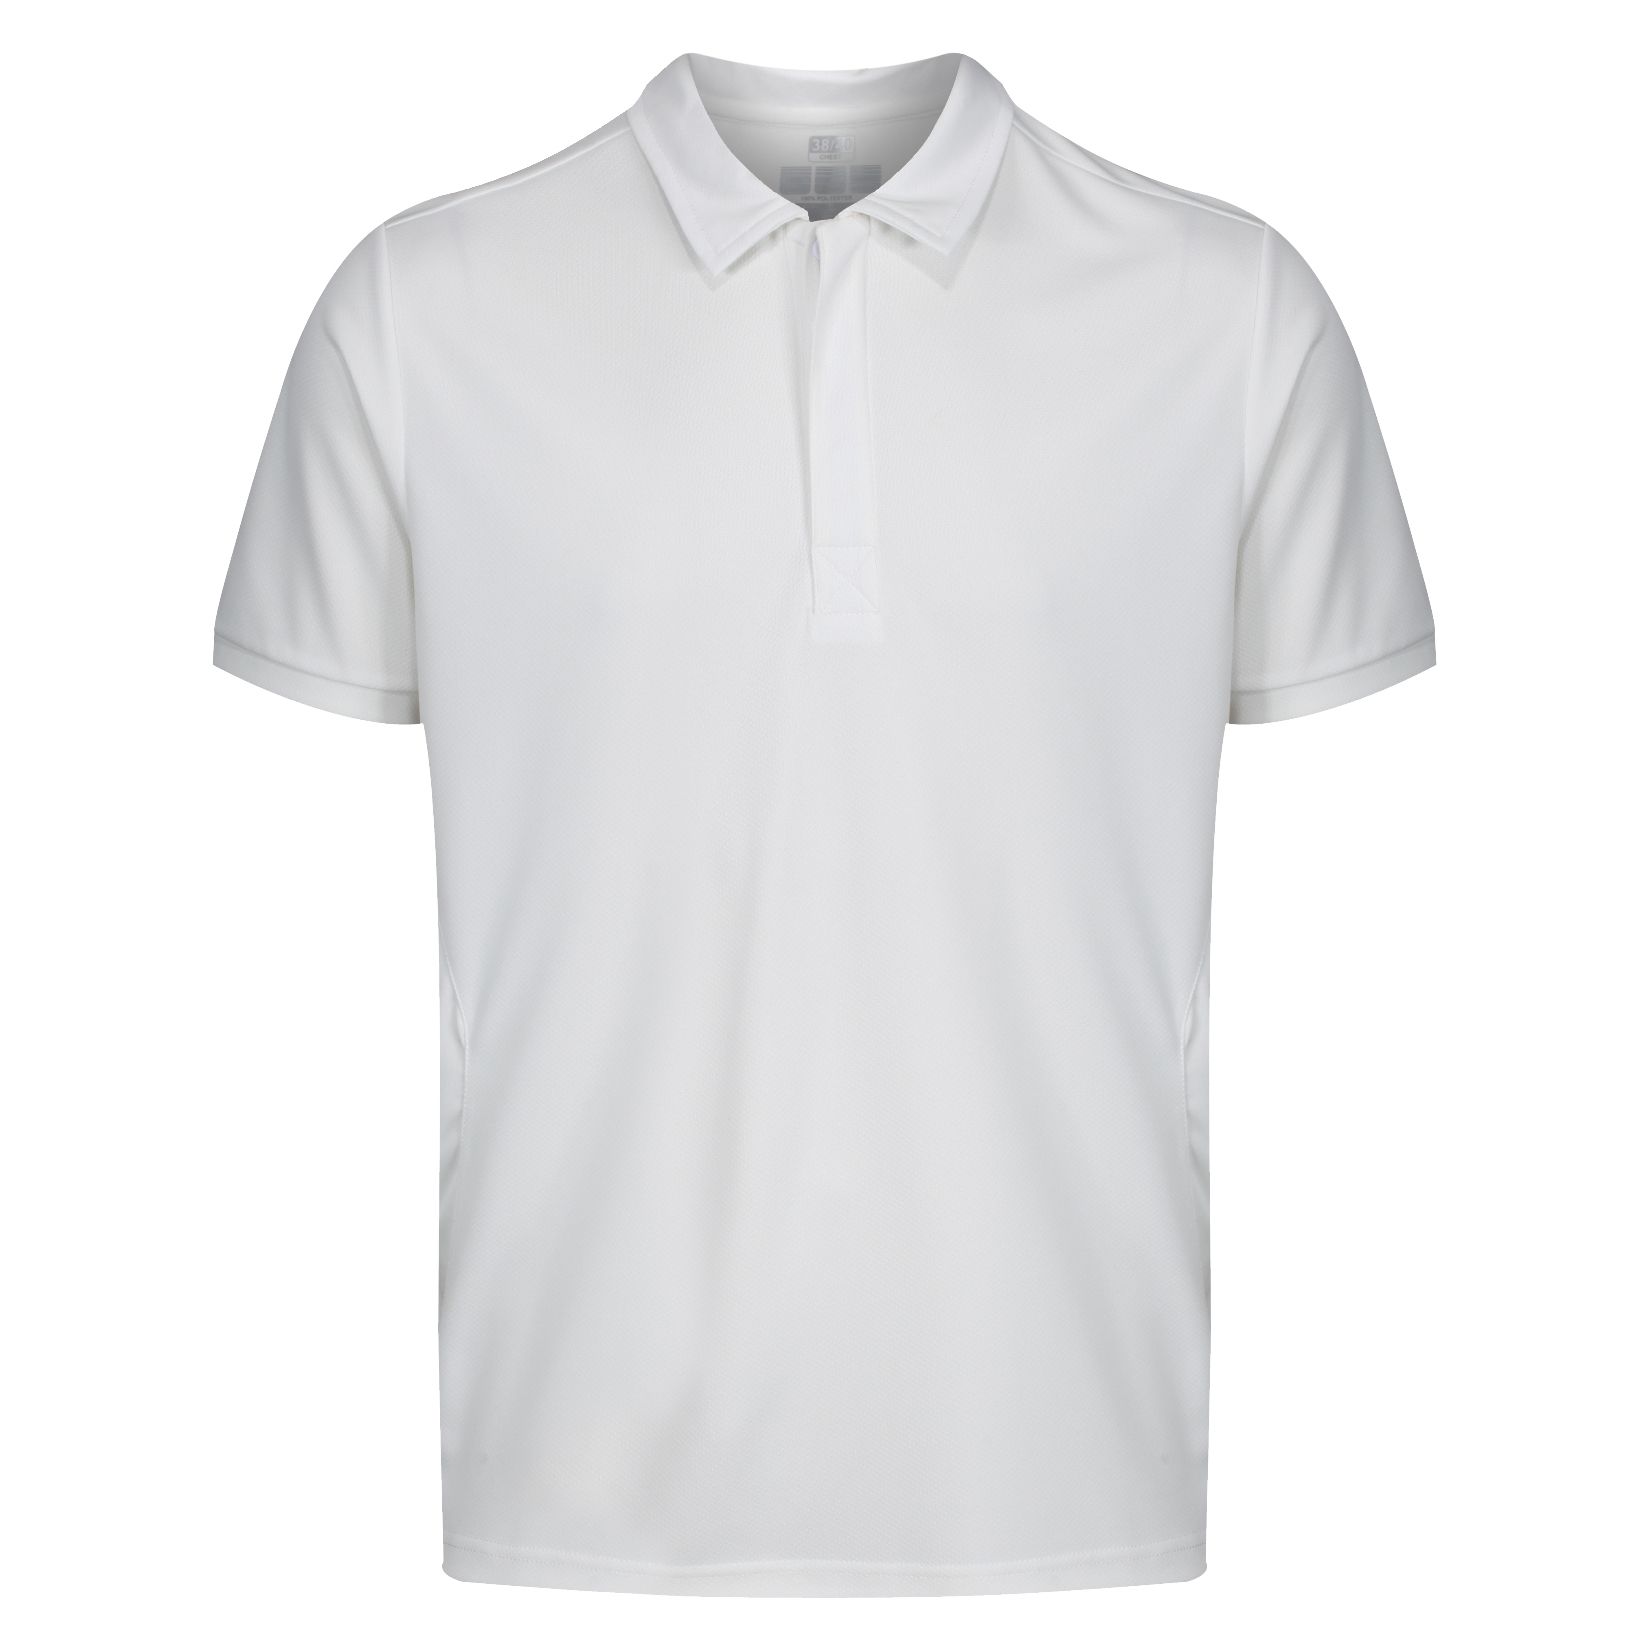 Classic Cricket Short Sleeve Shirt - Kitlocker.com